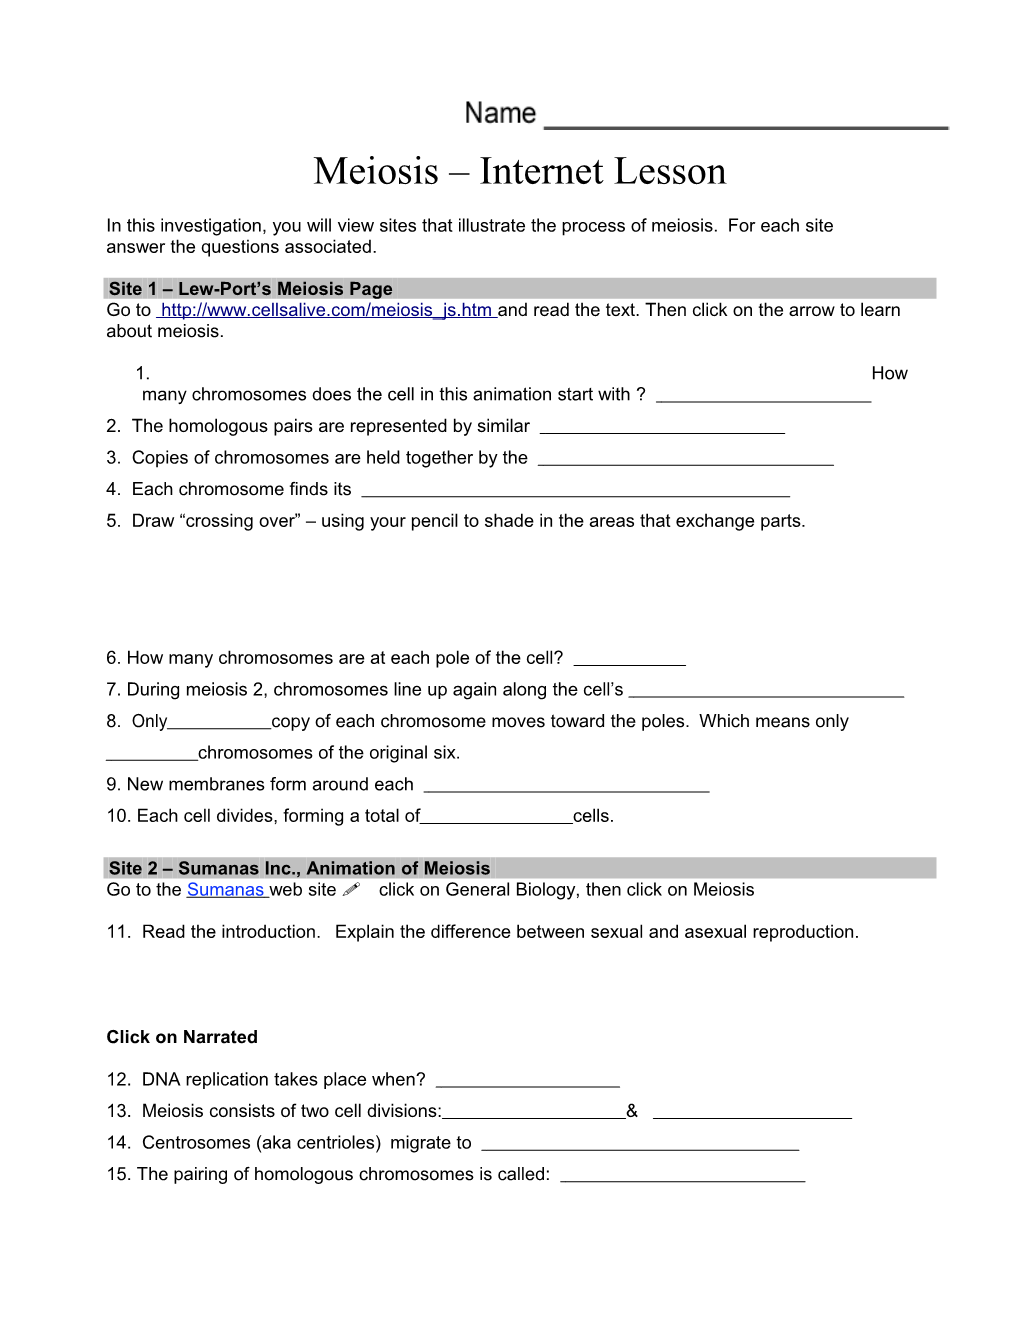 Meiosis Internetlesson